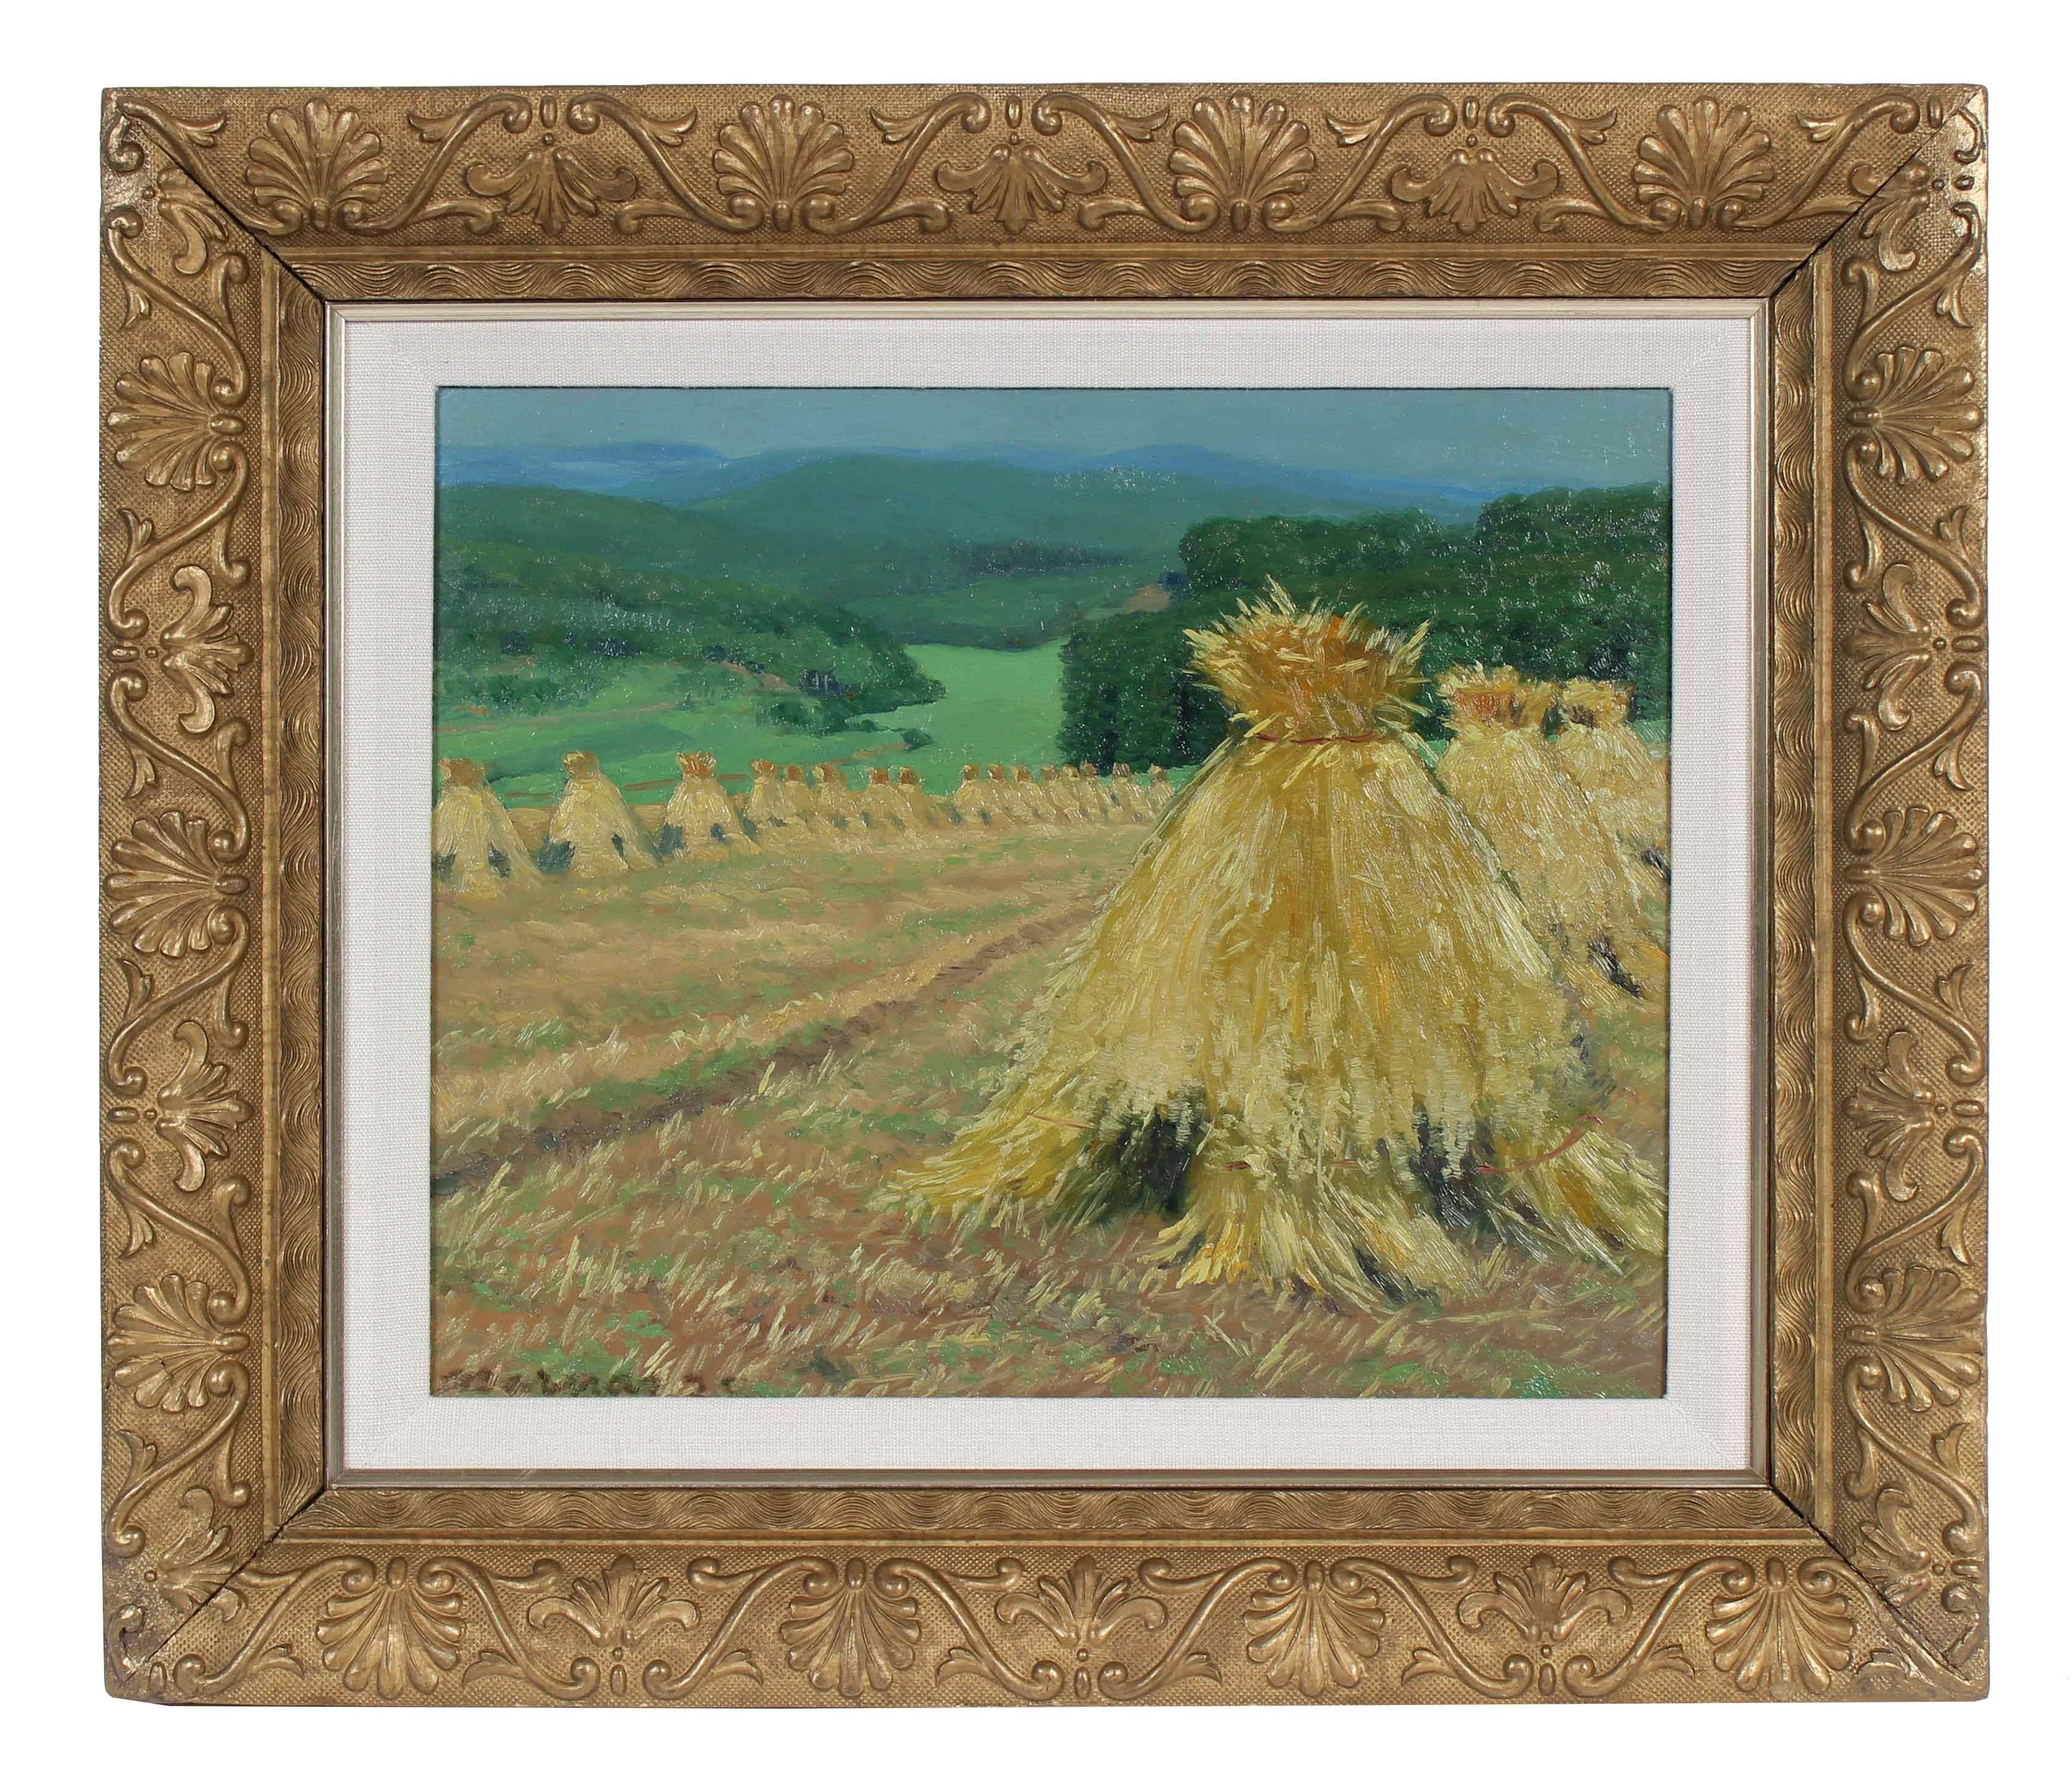 Carl Barnas Landscape Painting - "Oat Harvest" German Impressionist Oil Painting, Circa 1925